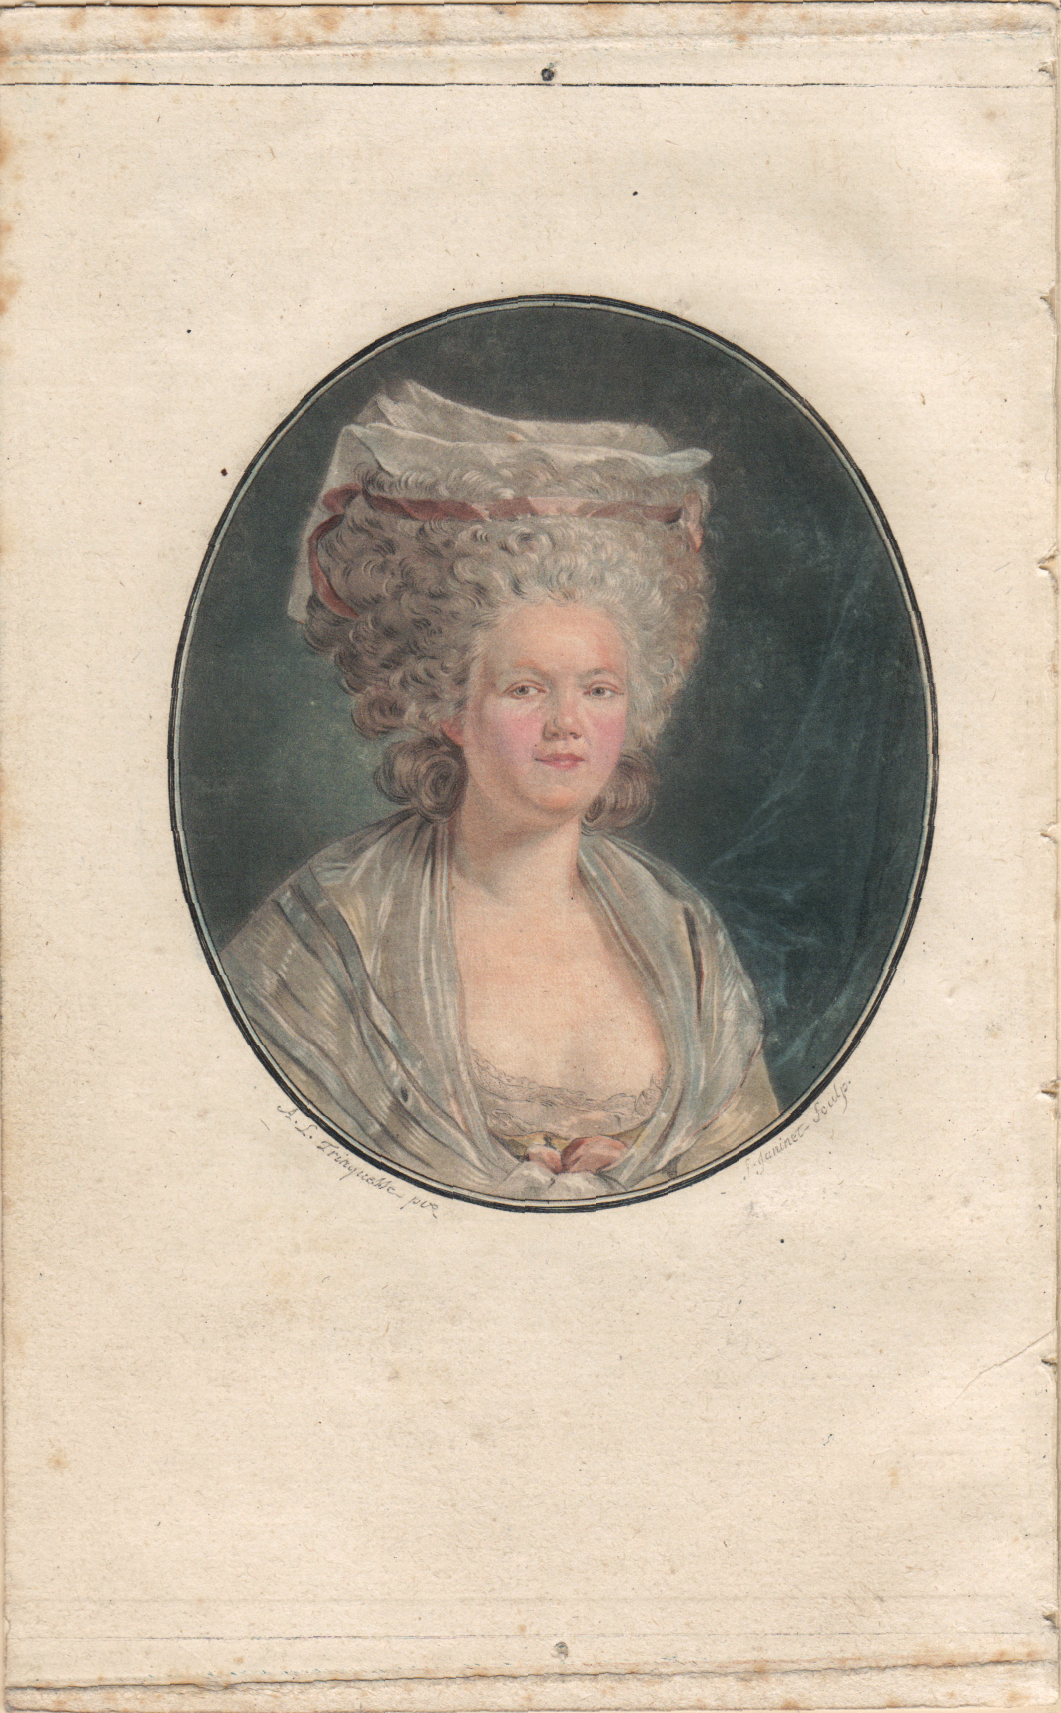 Janinet, Rose Bertin, color etching and aquatint, circa 1780